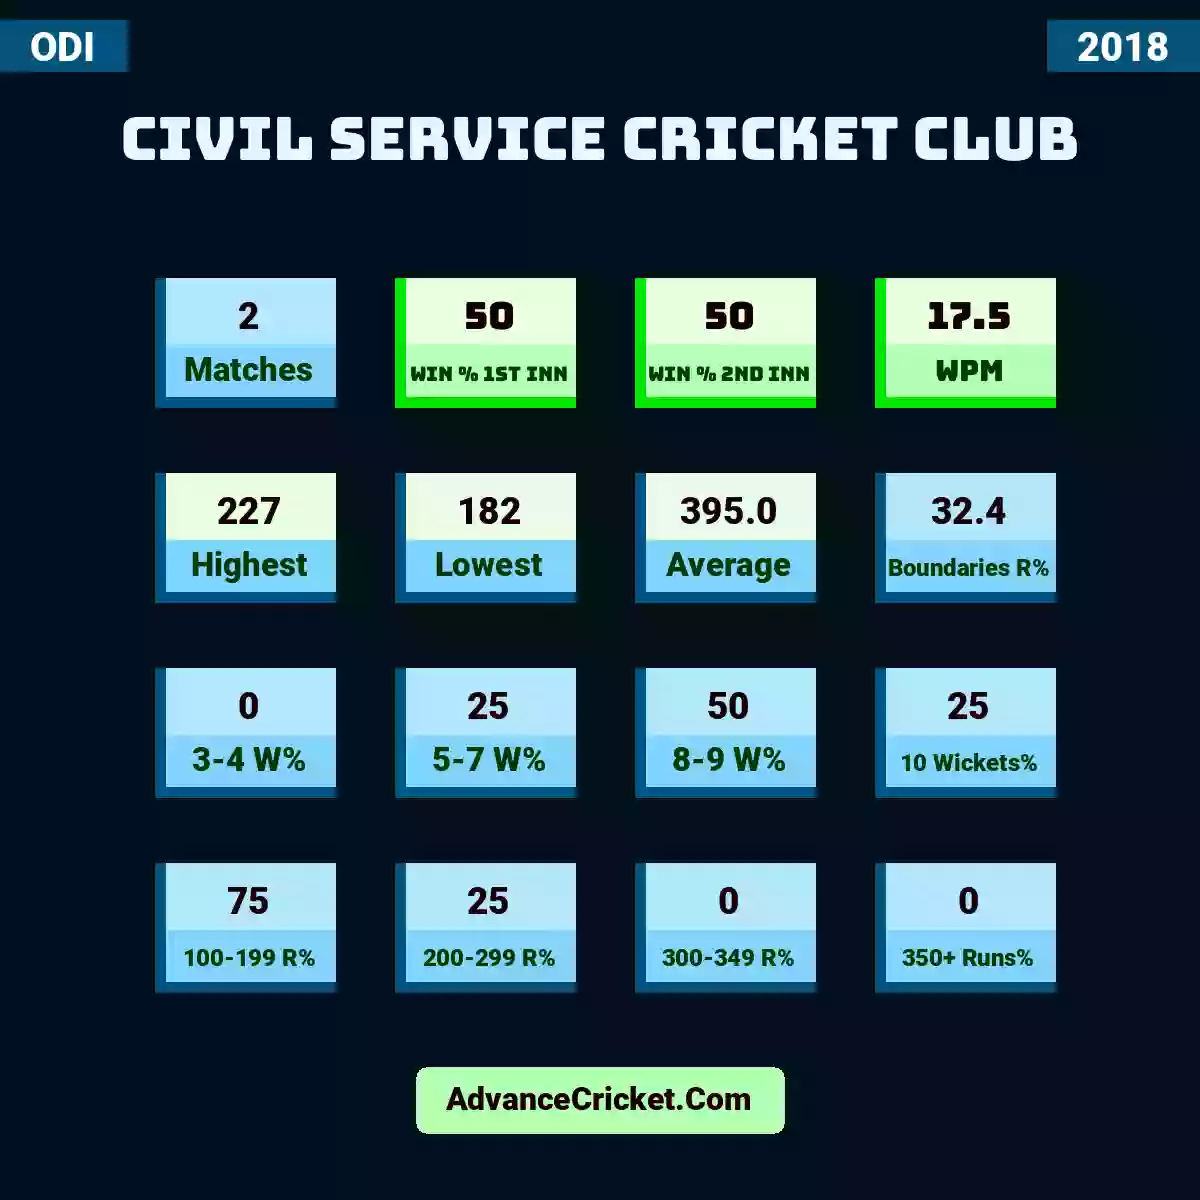 Image showing Civil Service Cricket Club with Matches: 2, Win % 1st Inn: 50, Win % 2nd Inn: 50, WPM: 17.5, Highest: 227, Lowest: 182, Average: 395.0, Boundaries R%: 32.4, 3-4 W%: 0, 5-7 W%: 25, 8-9 W%: 50, 10 Wickets%: 25, 100-199 R%: 75, 200-299 R%: 25, 300-349 R%: 0, 350+ Runs%: 0.